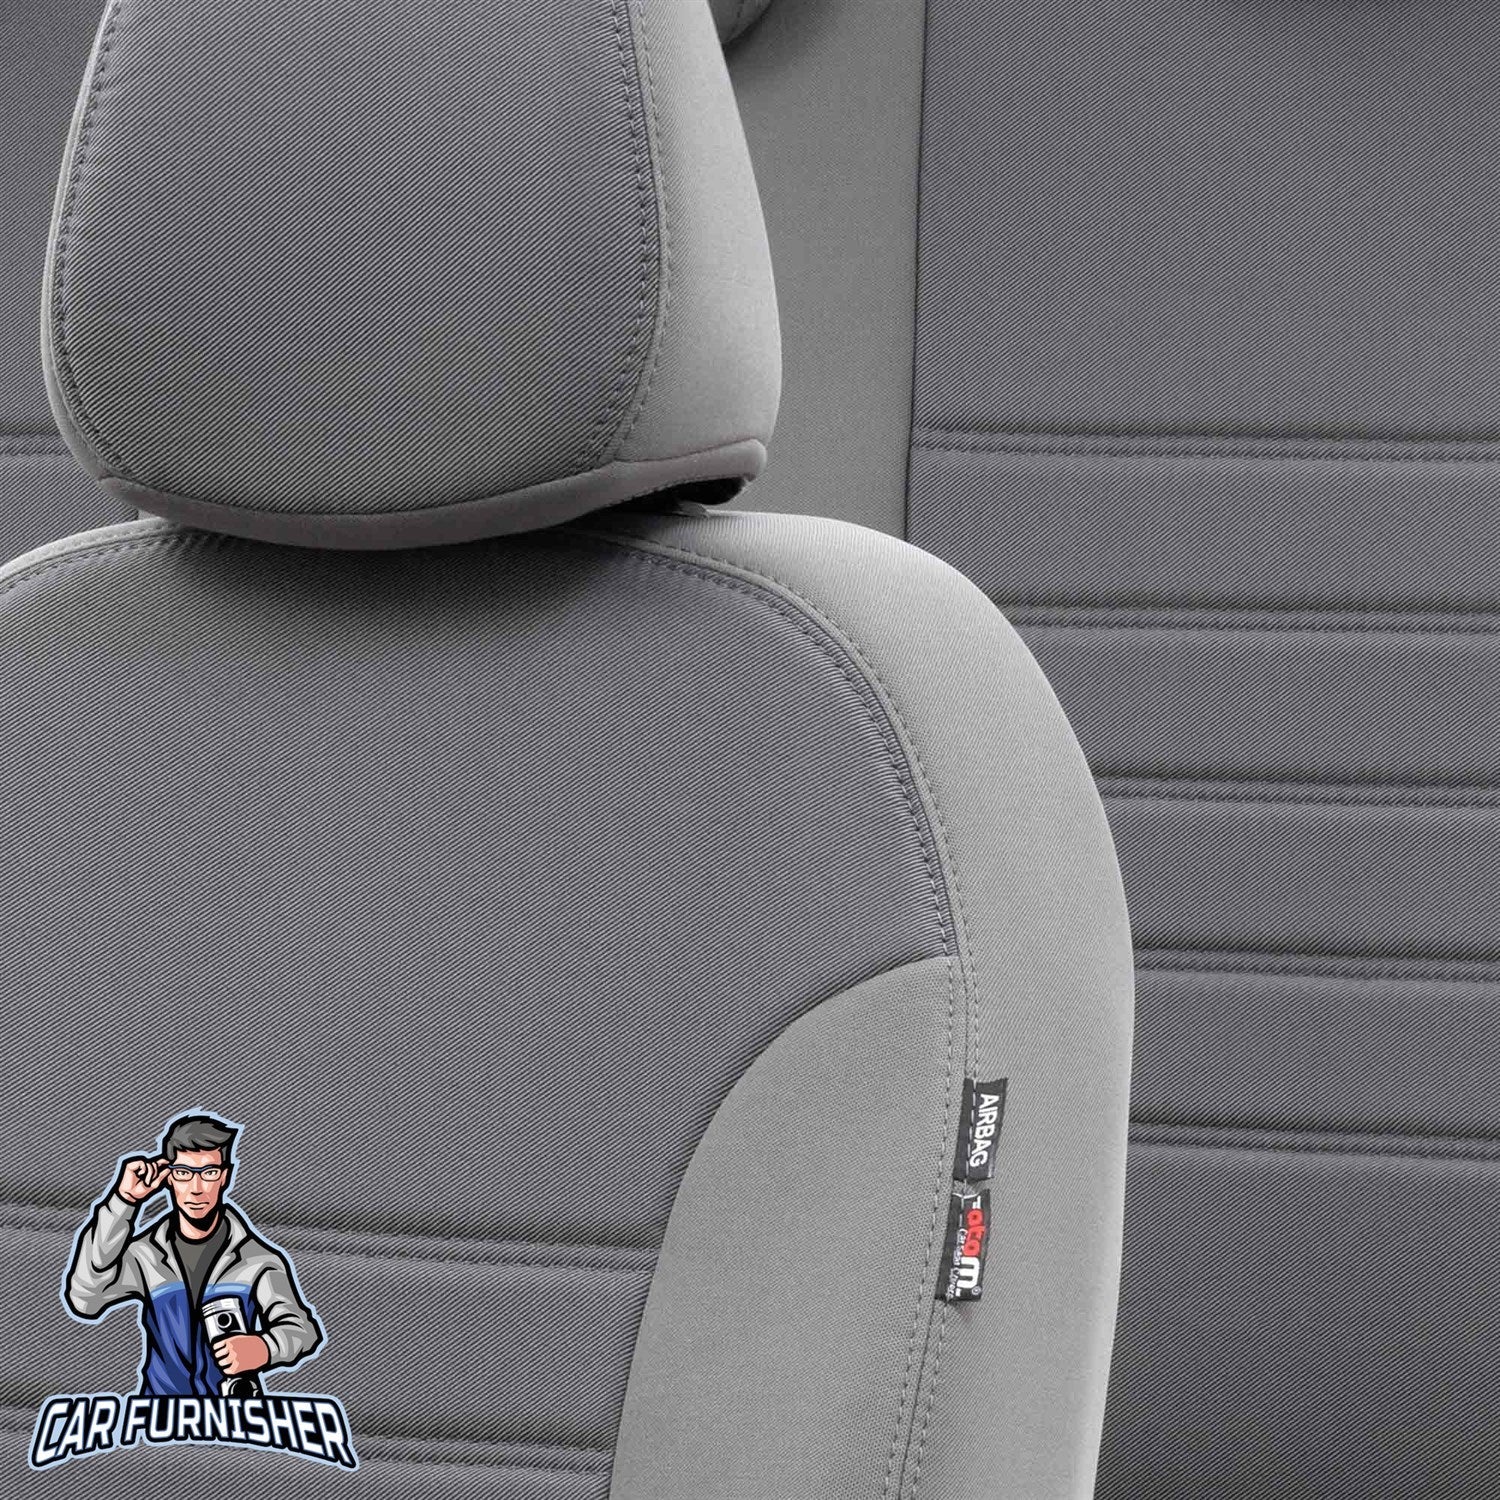 Kia Ceed Seat Covers Original Jacquard Design Gray Jacquard Fabric